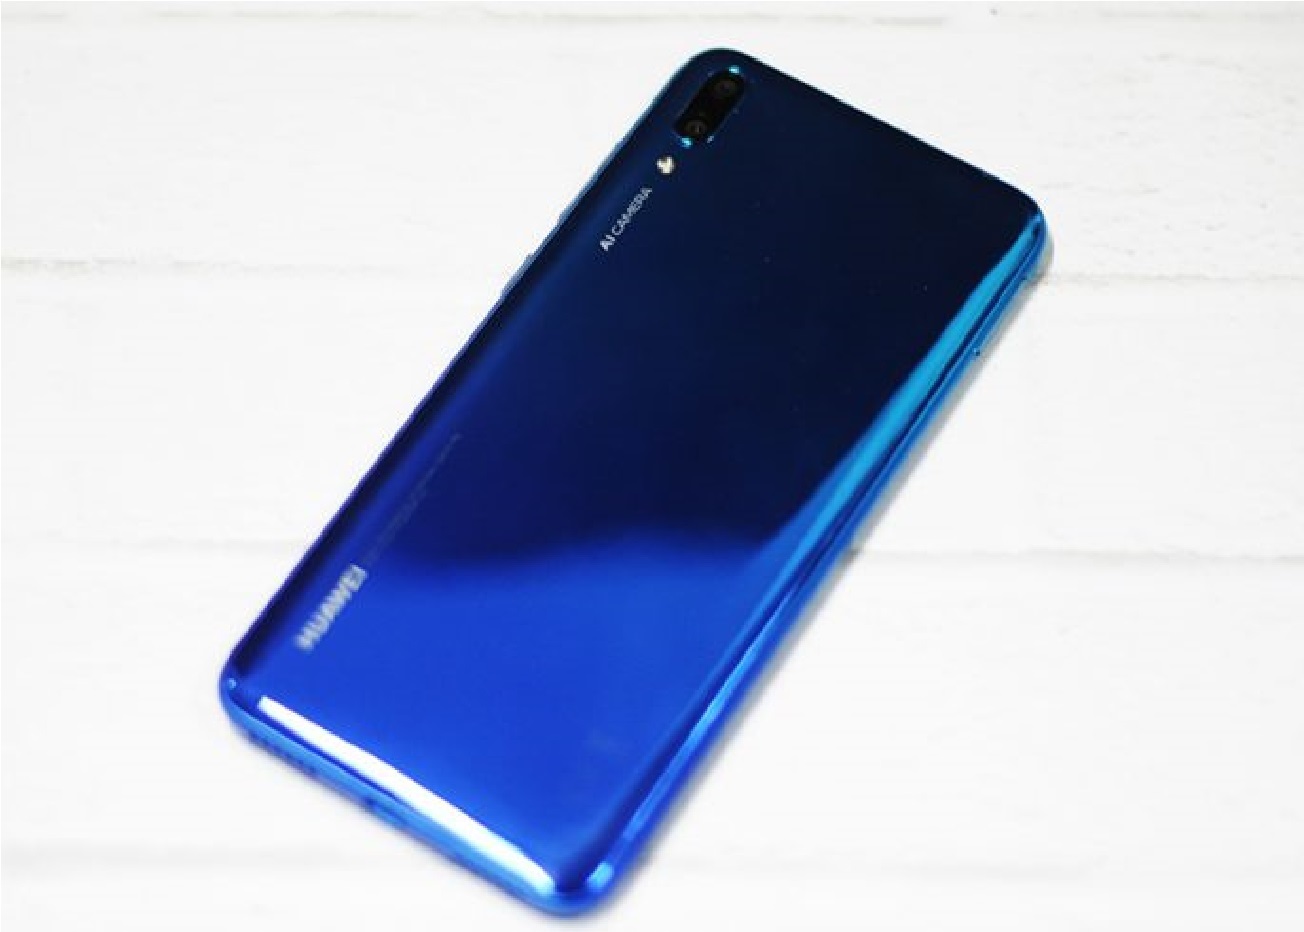 Huawei Y7 Pro 5 696x462 1